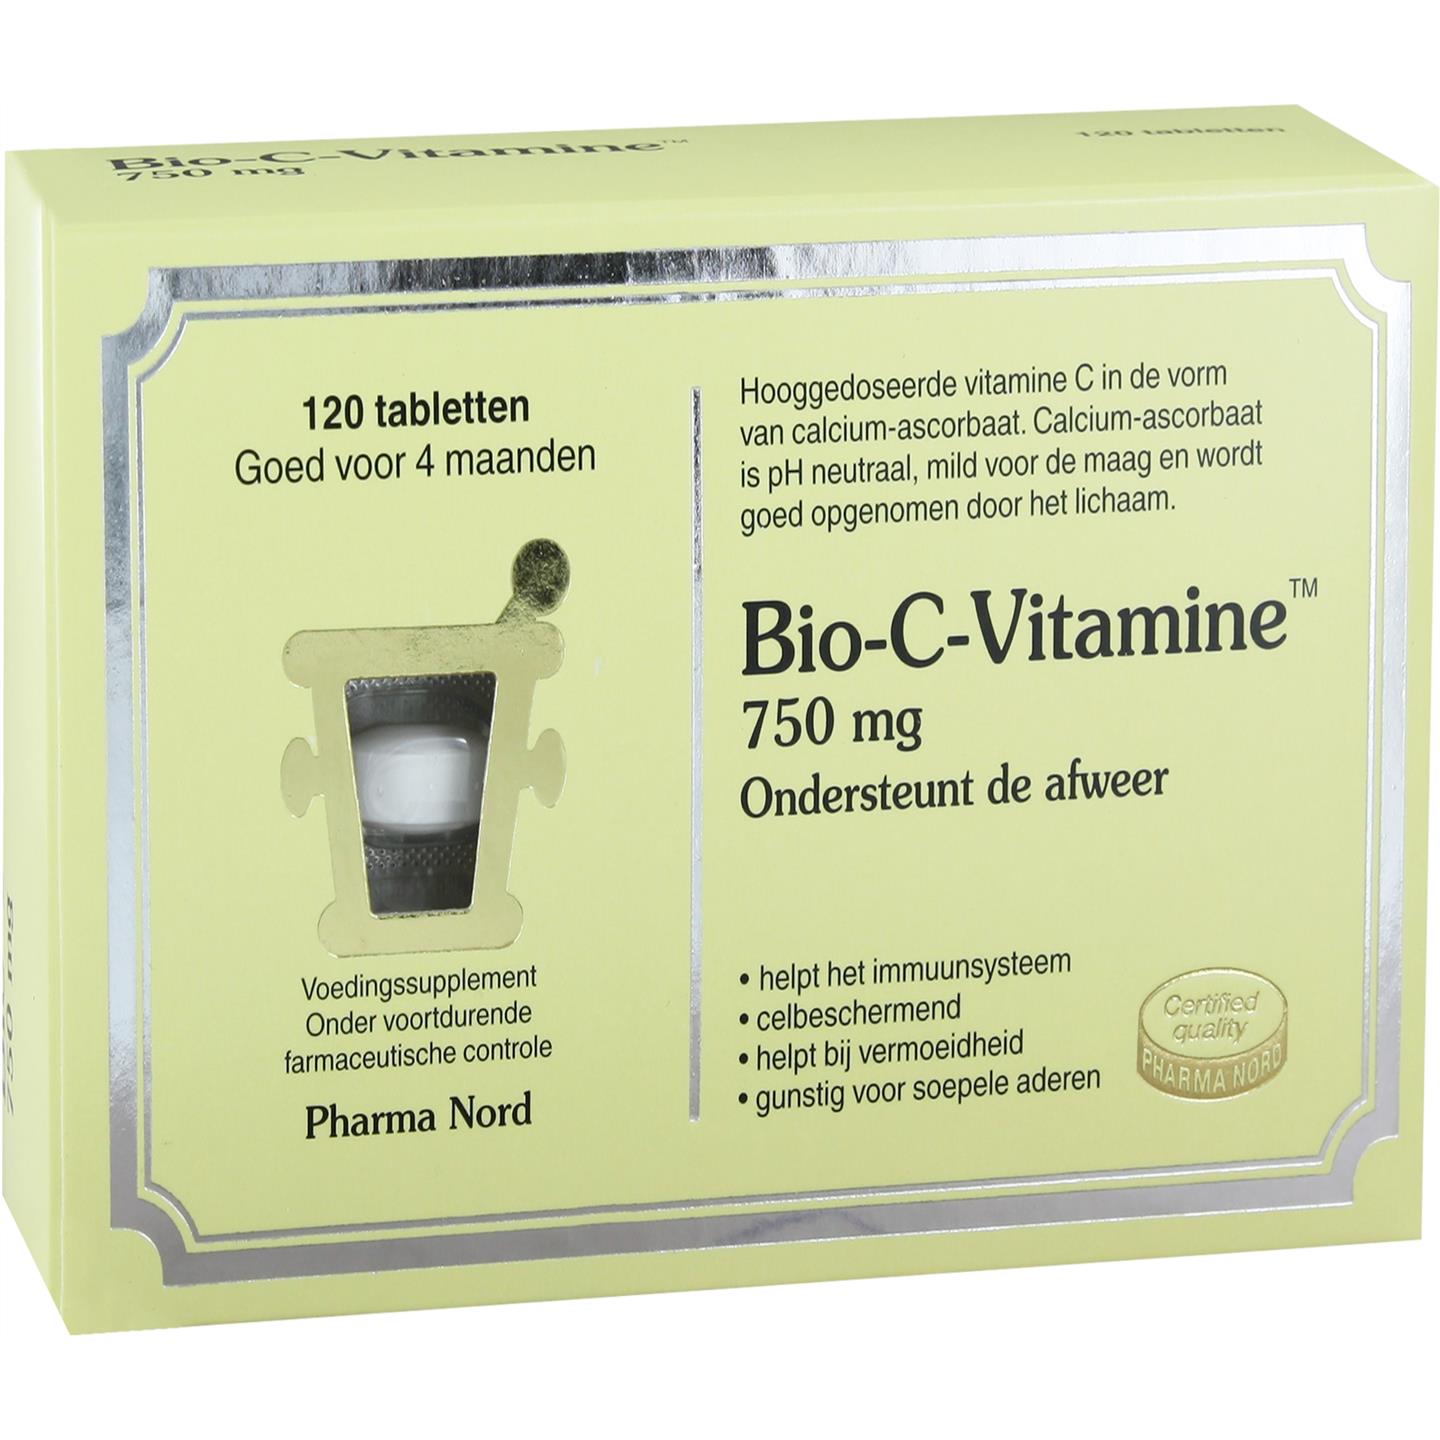 Bio-C-Vitamine